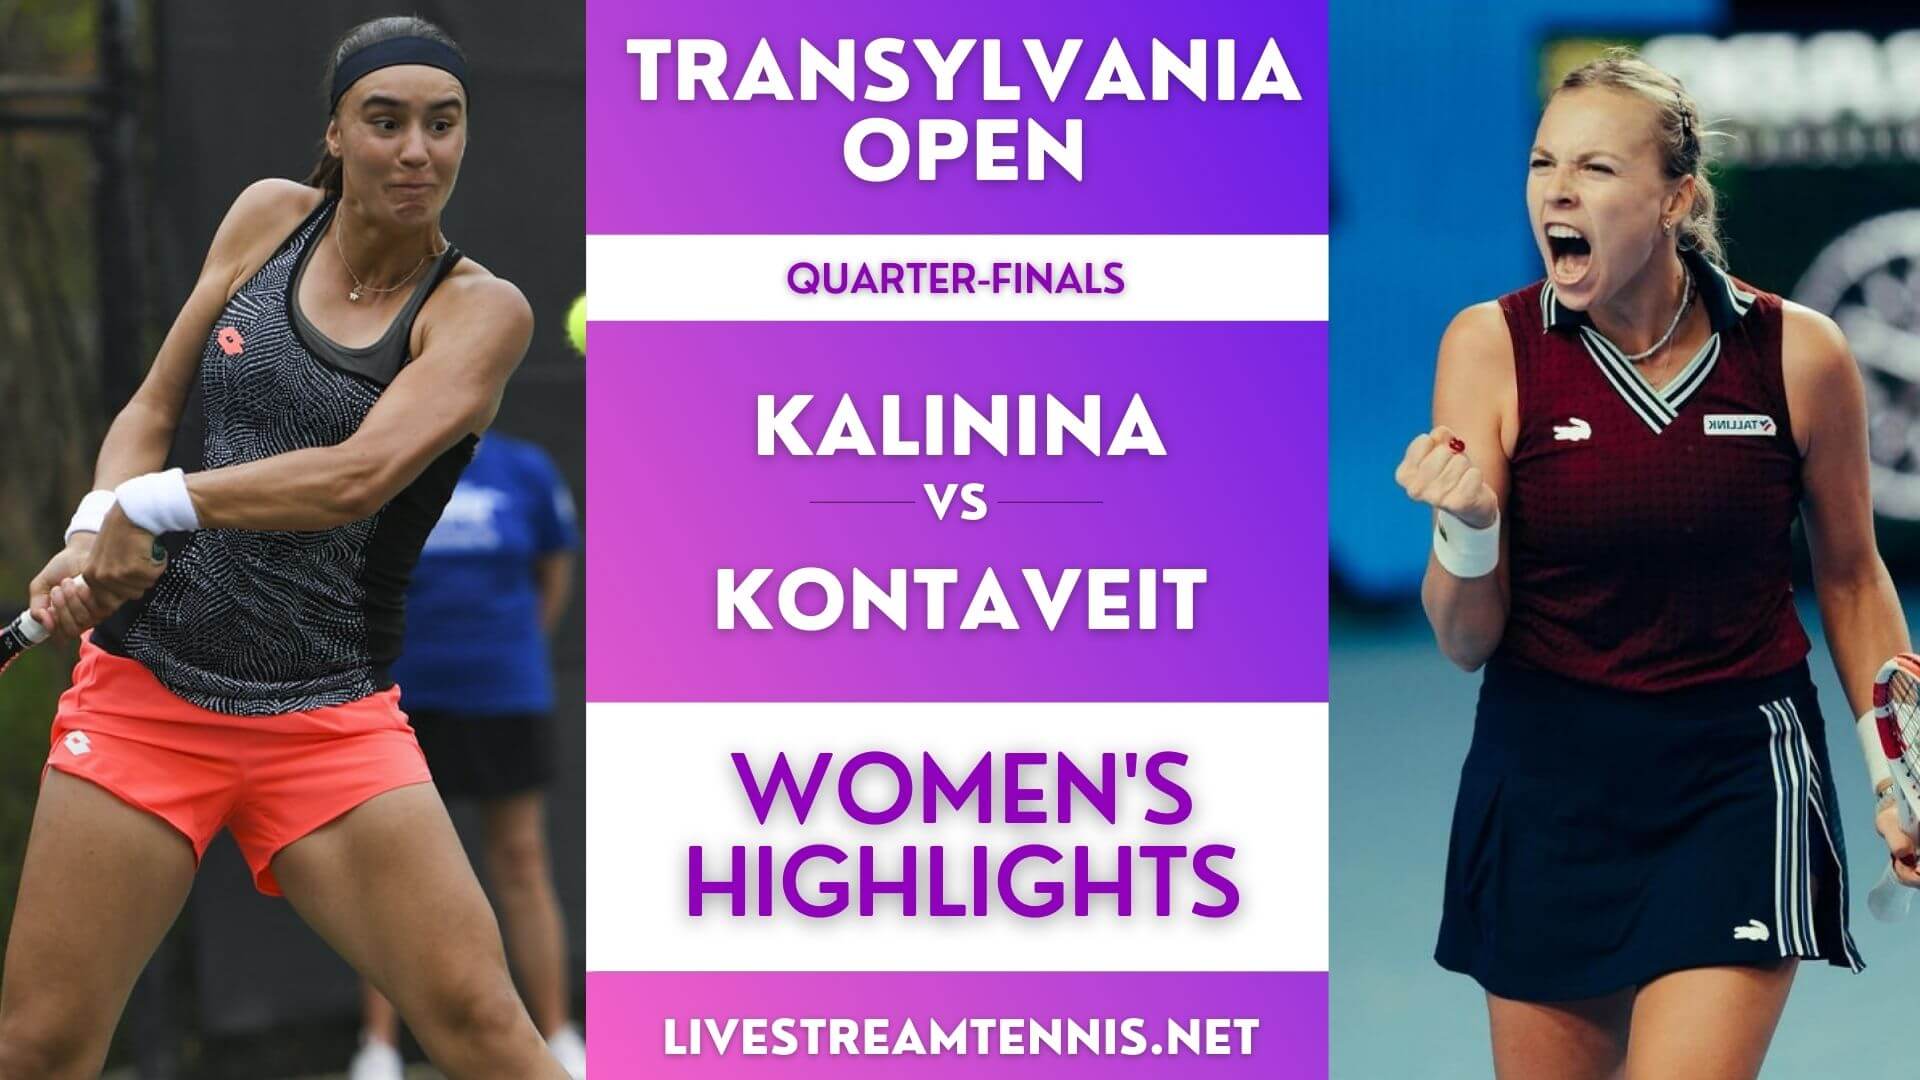 Transylvania Open WTA Quarter Final 3 Highlights 2021